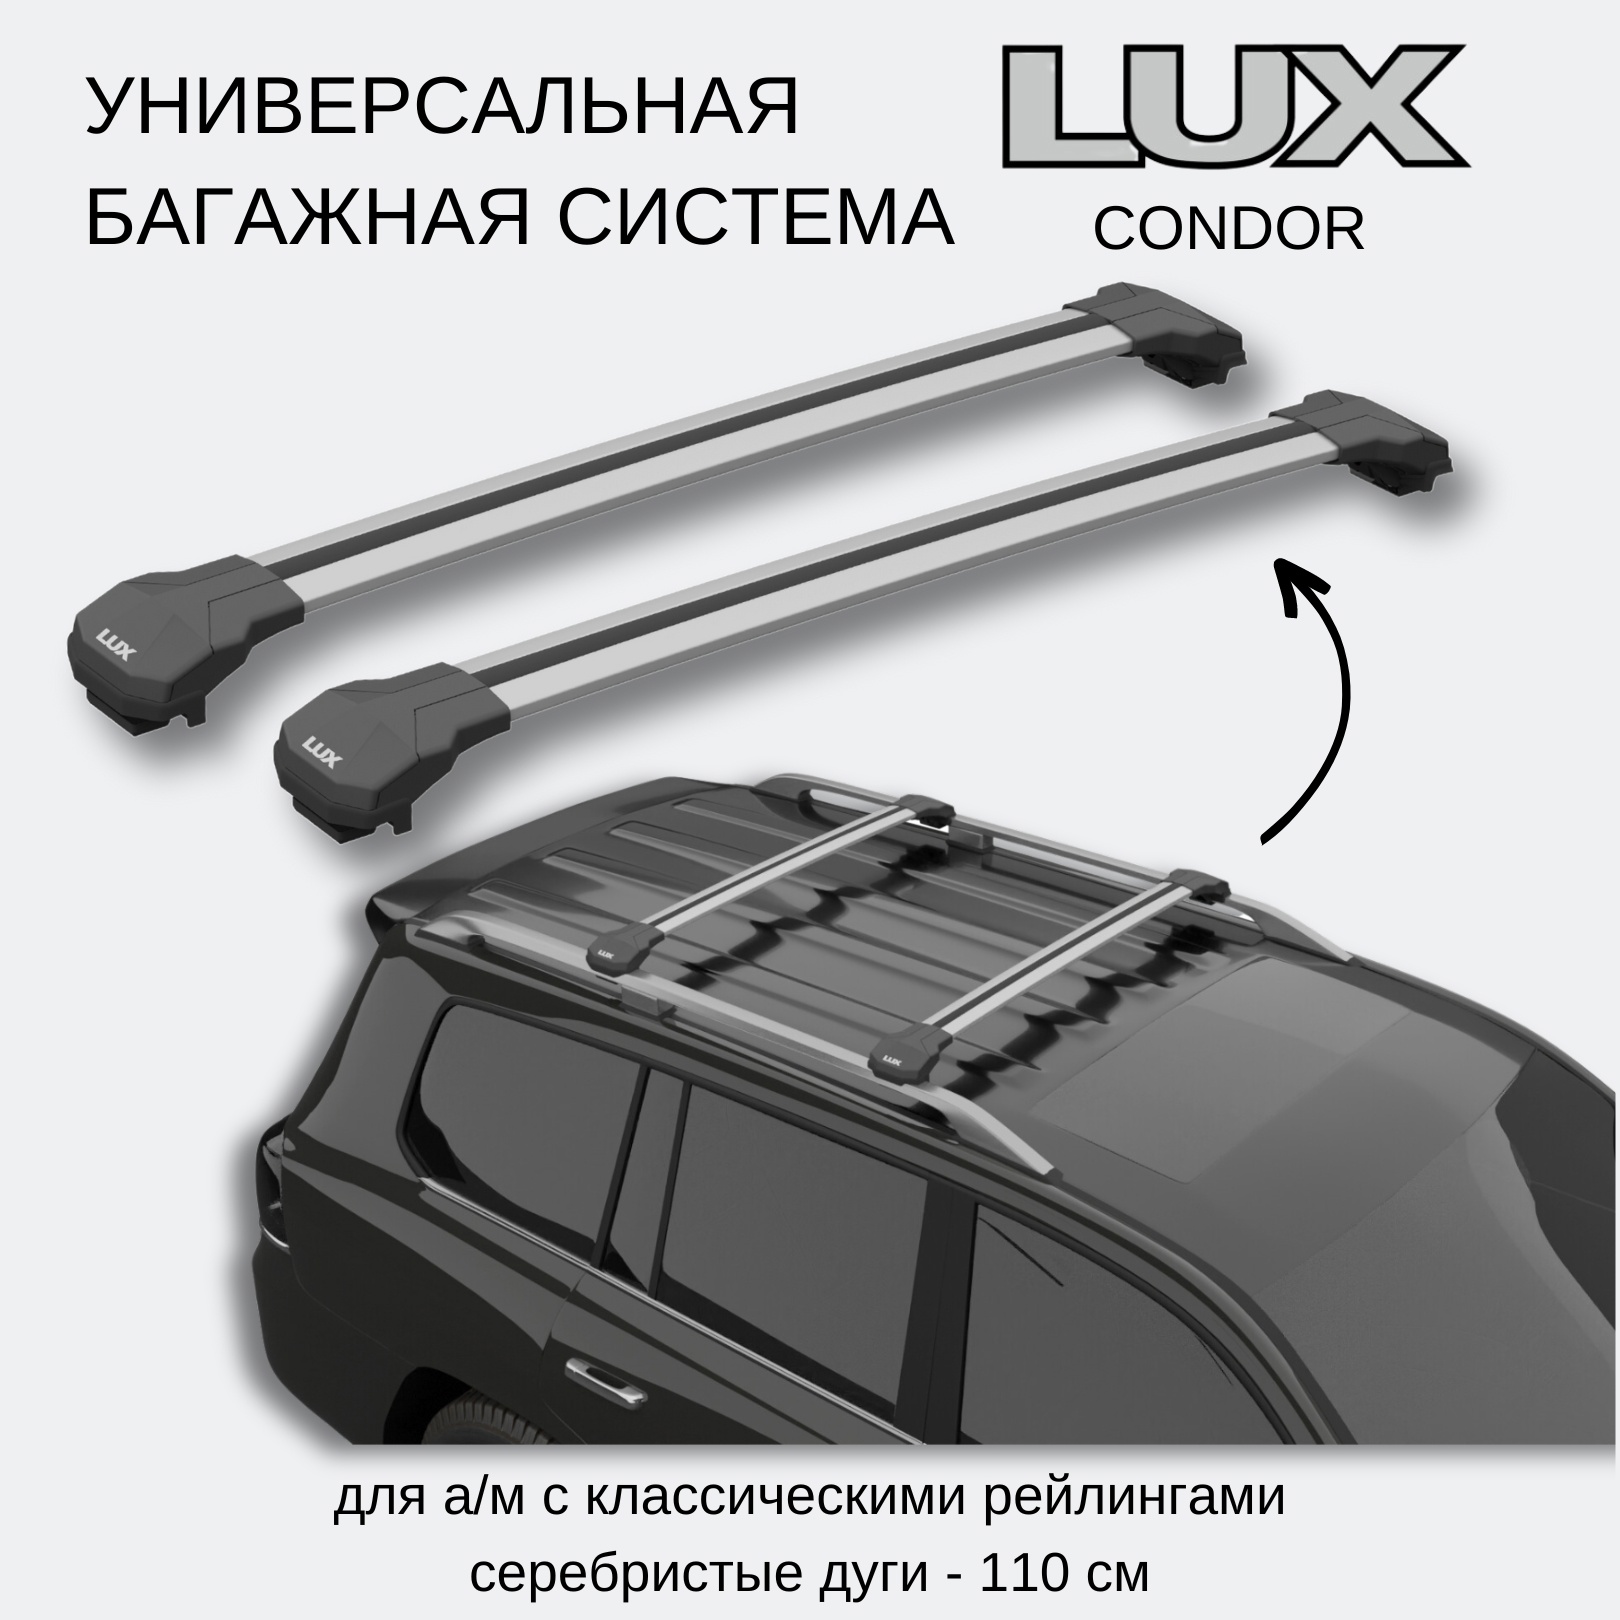 

Багажник на крышу LUX CONDOR Lada Largus 2012-, Серебристый, Condor207